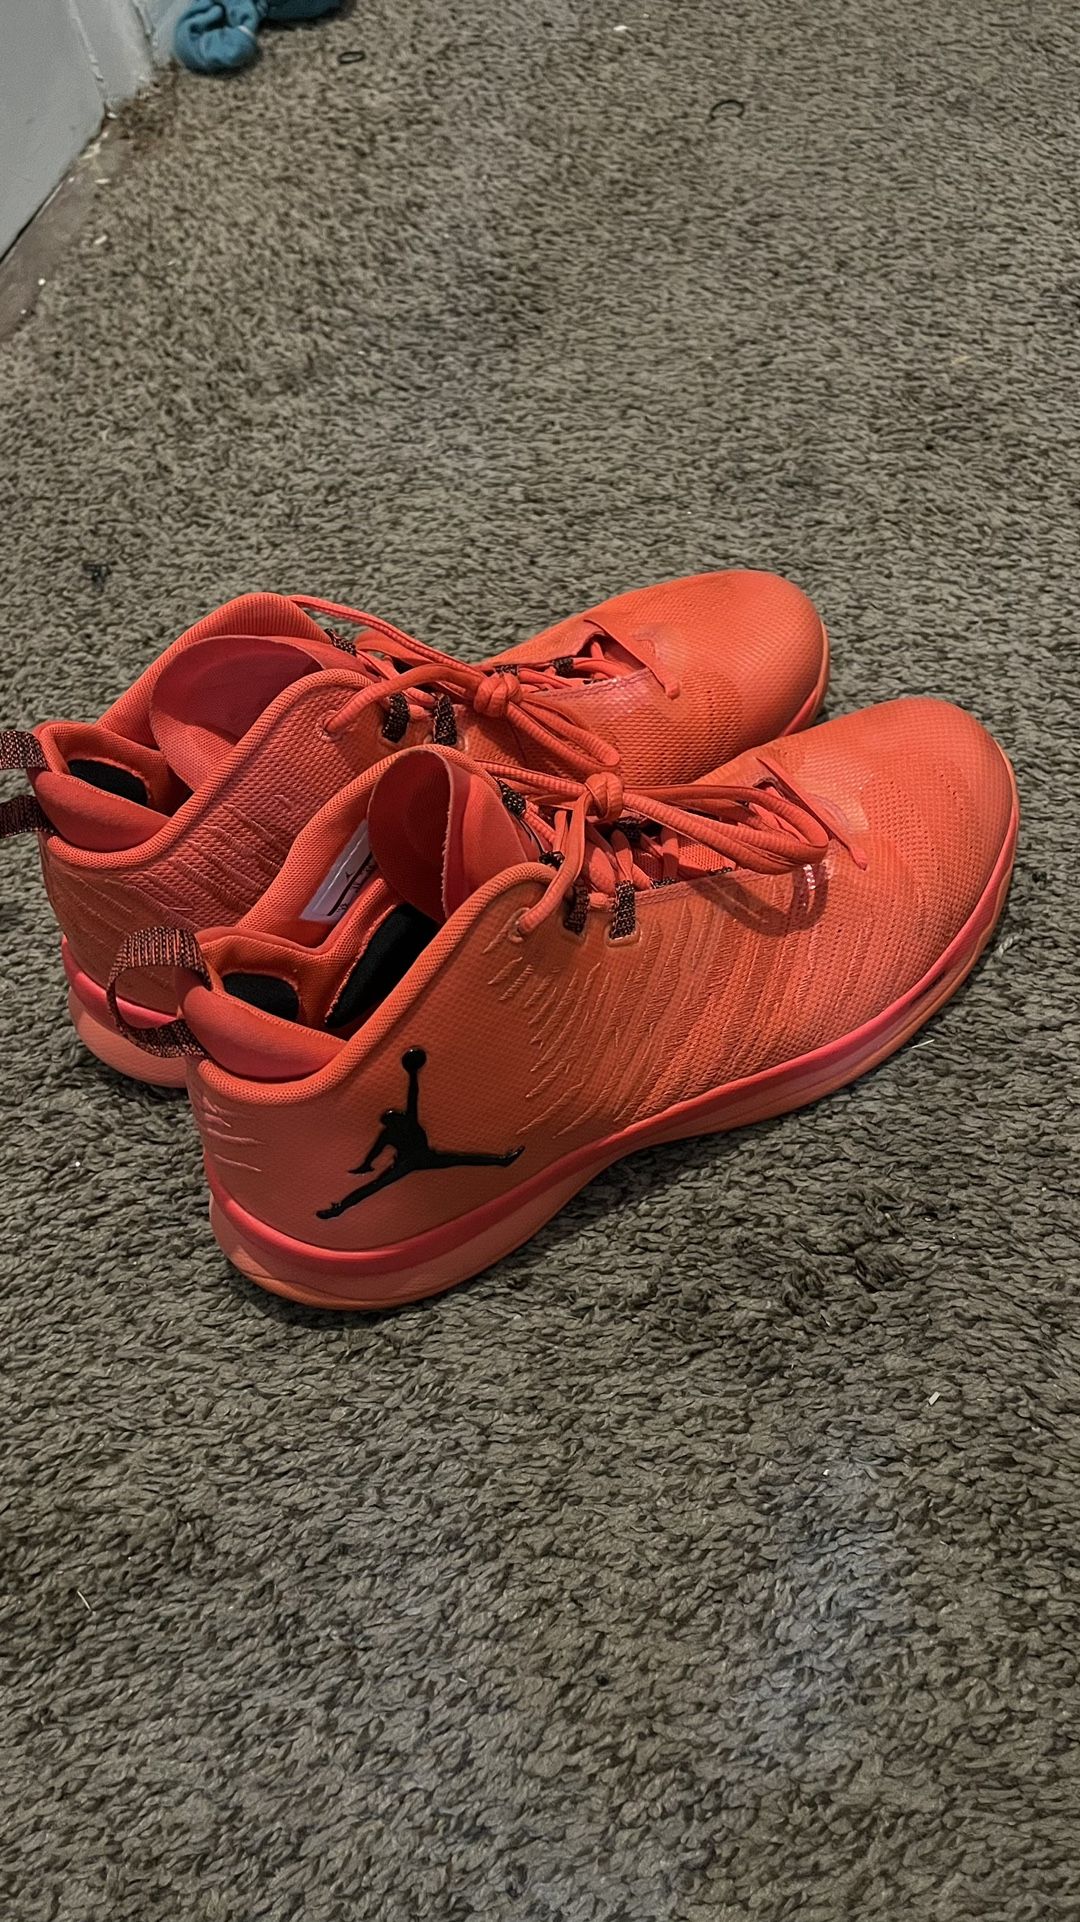 Orange Jordans (basketball Shoes)